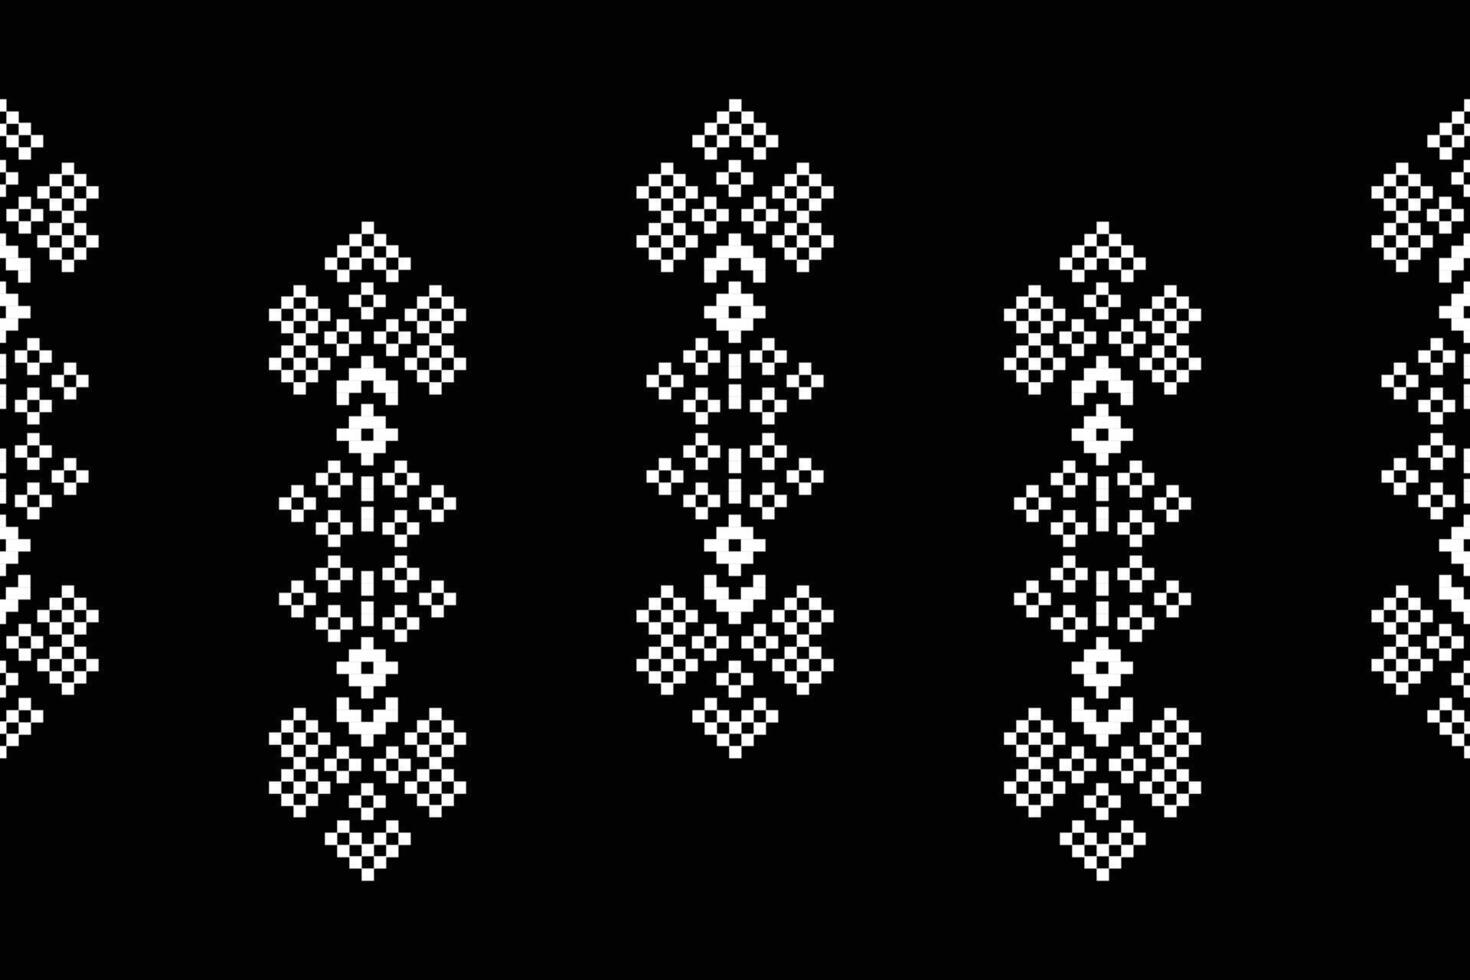 traditionell etnisk motiv ikat geometrisk tyg mönster korsa stitch.ikat broderi etnisk orientalisk pixel svart background.abstract, vektor, illustration. textur, halsduk, dekoration, tapeter. vektor